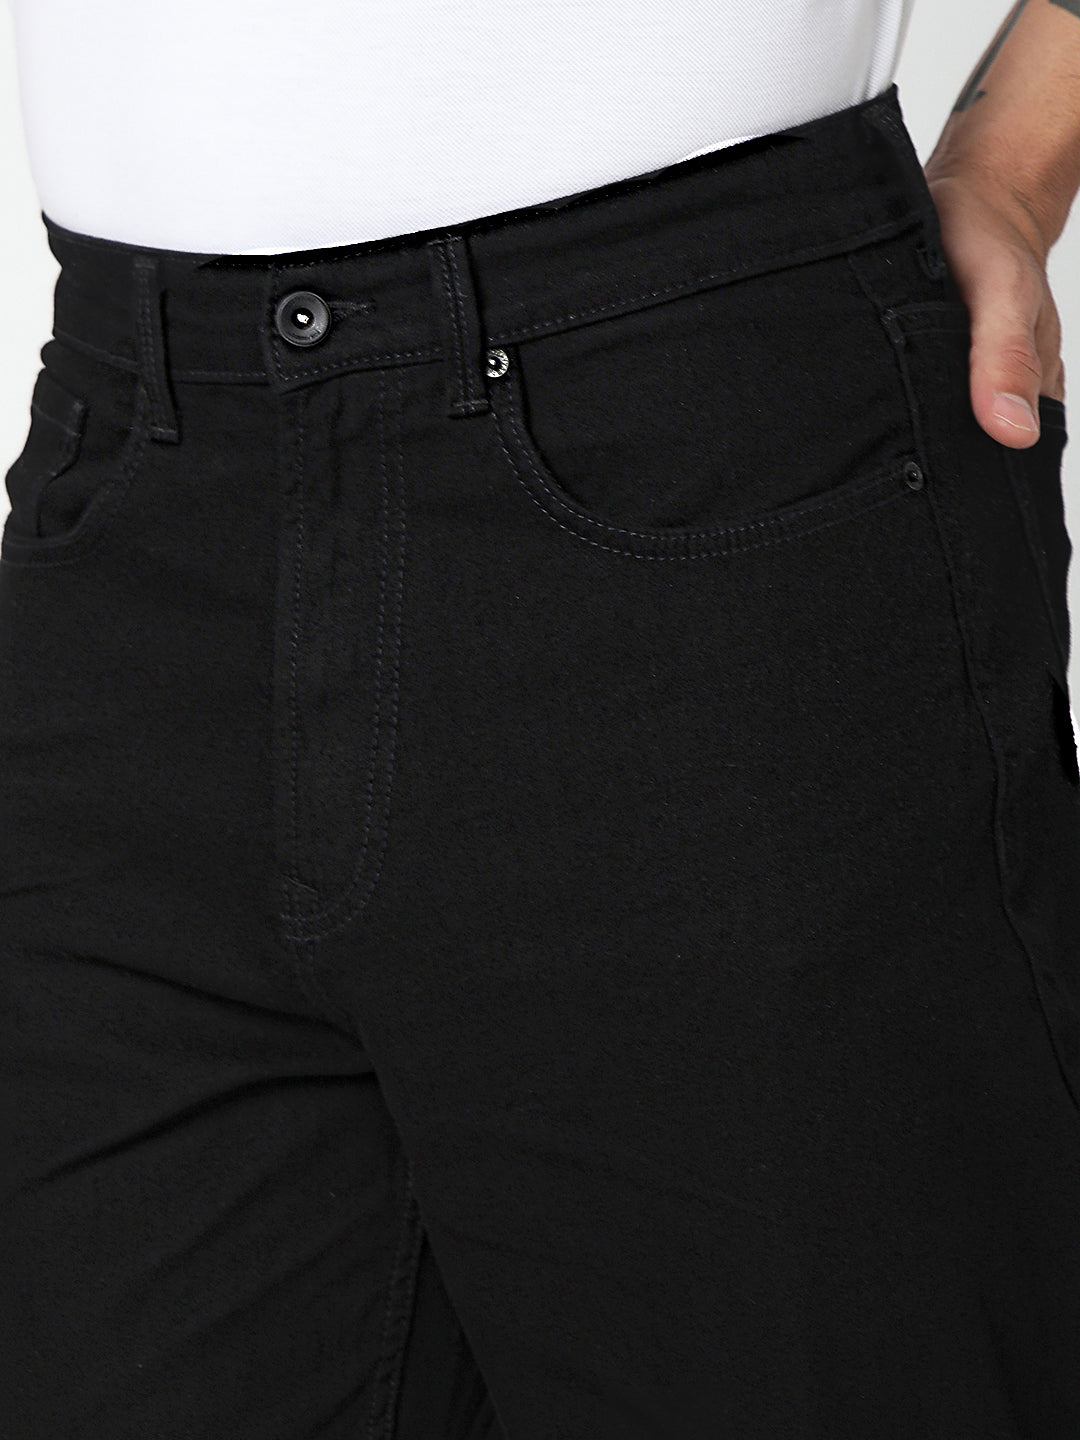 Spykar Black Cotton Loose Fit Regular Length Jeans For Men (Renato)